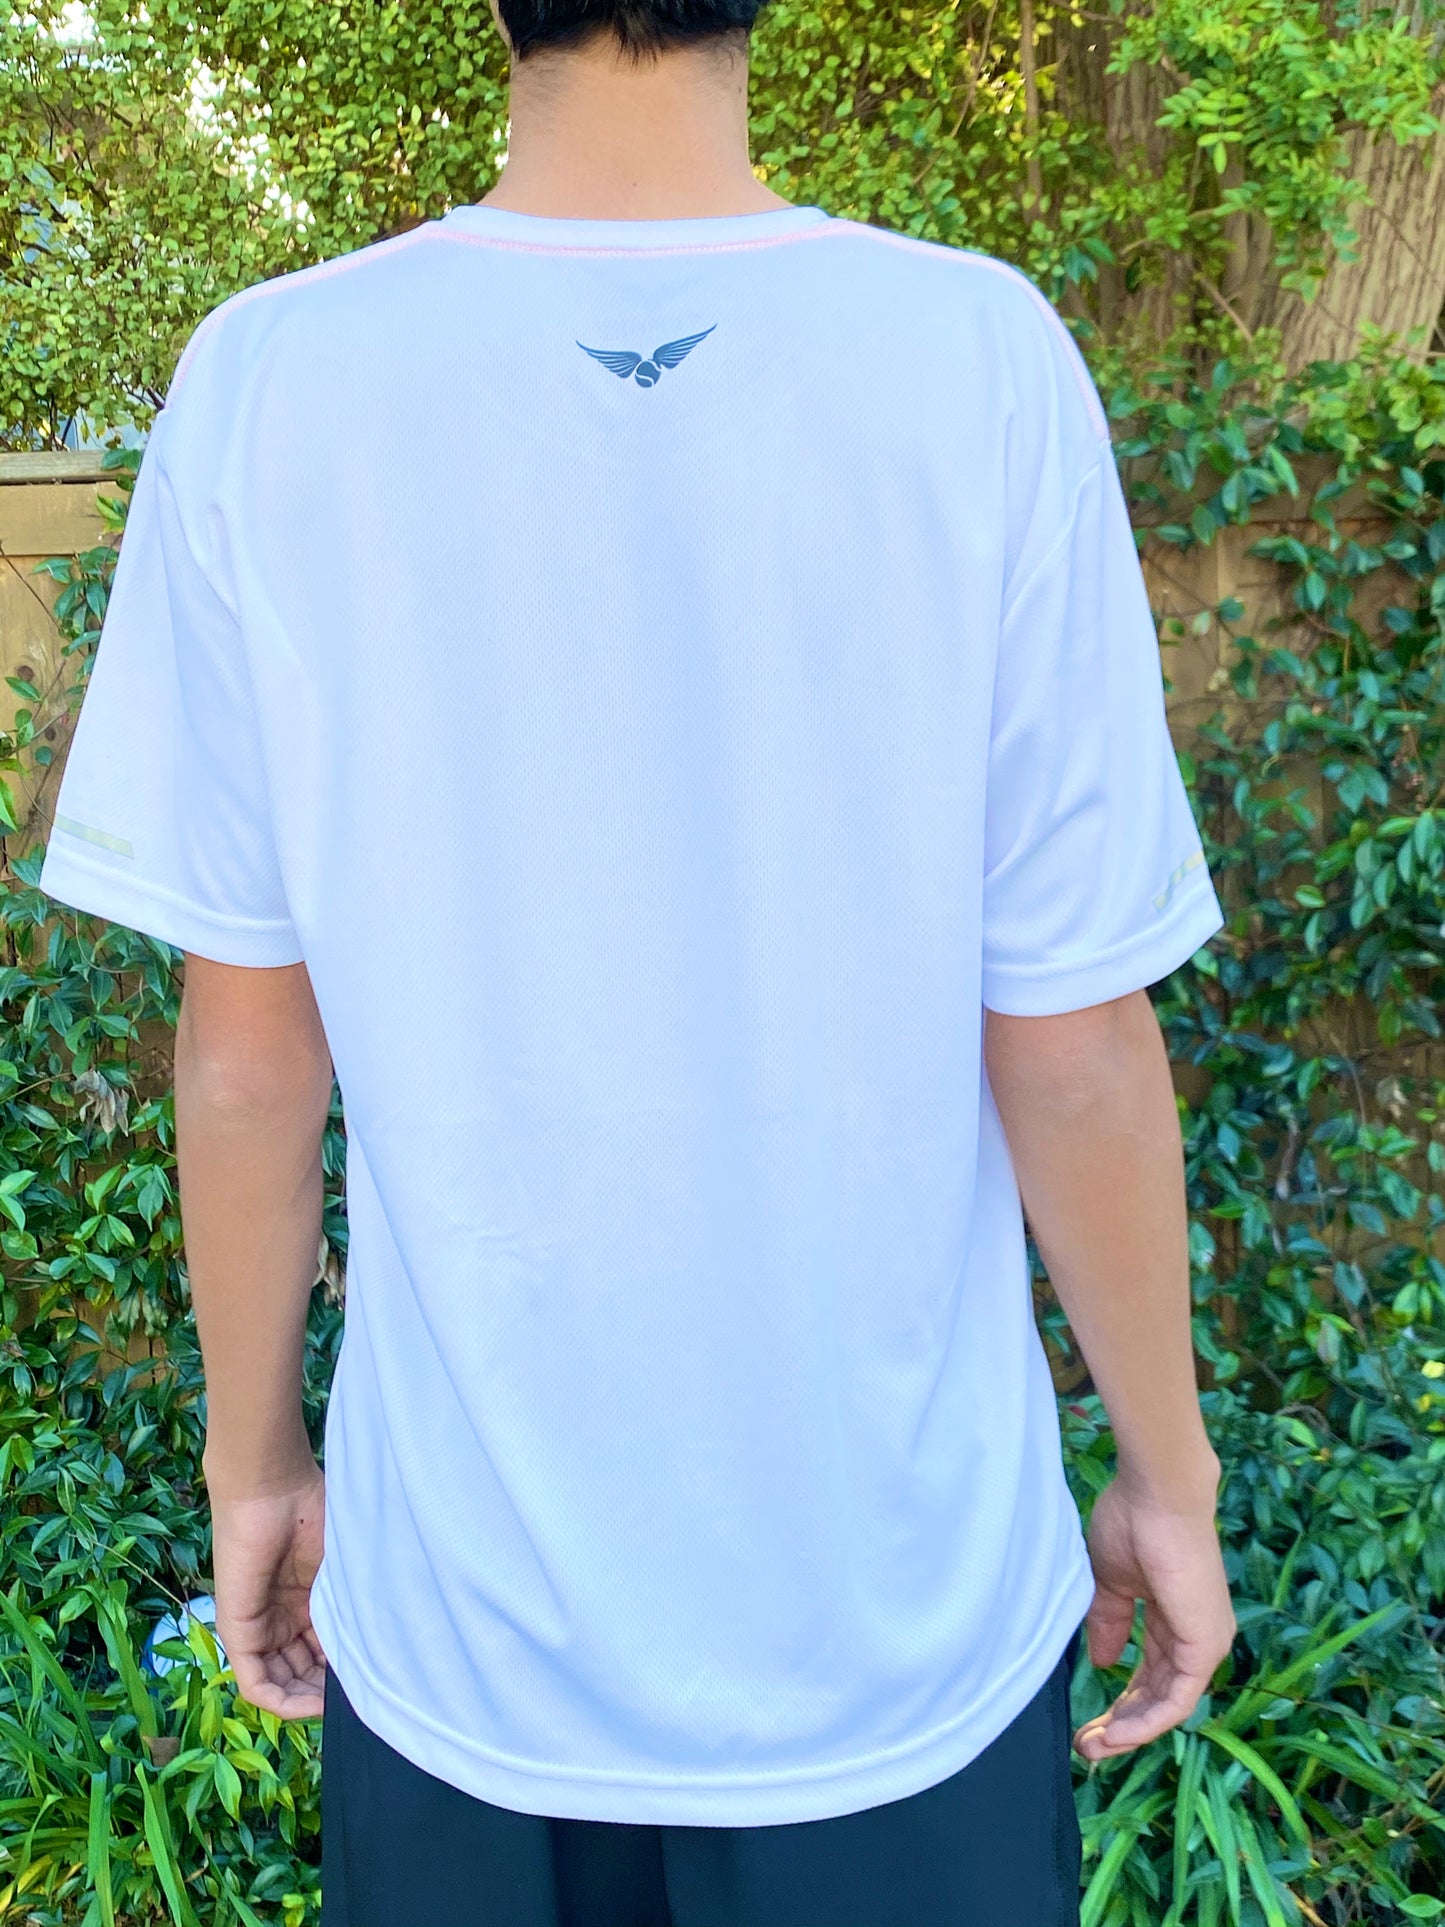 PRC Men’s Athletic S/S Shirt - White